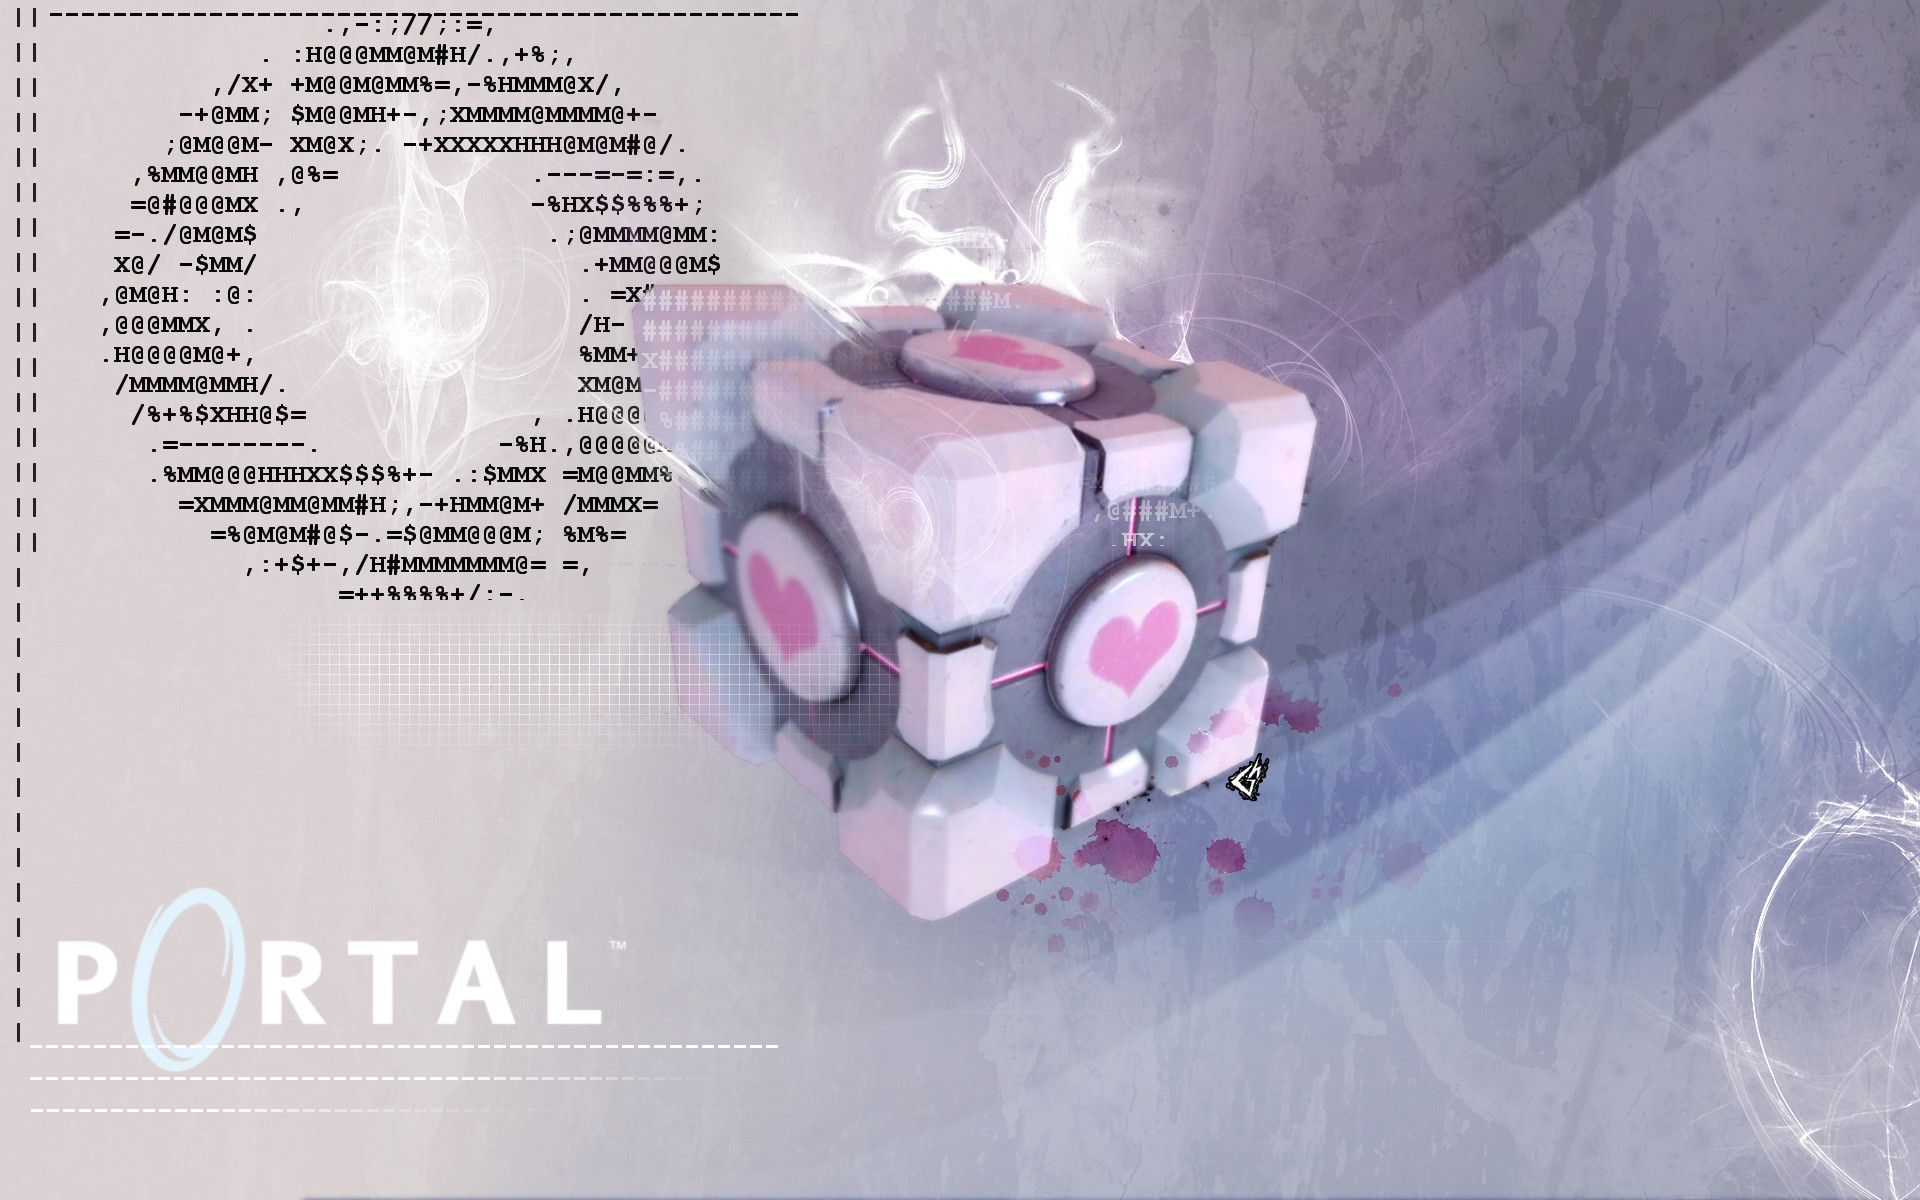 Portal Companion Cube Hd , HD Wallpaper & Backgrounds